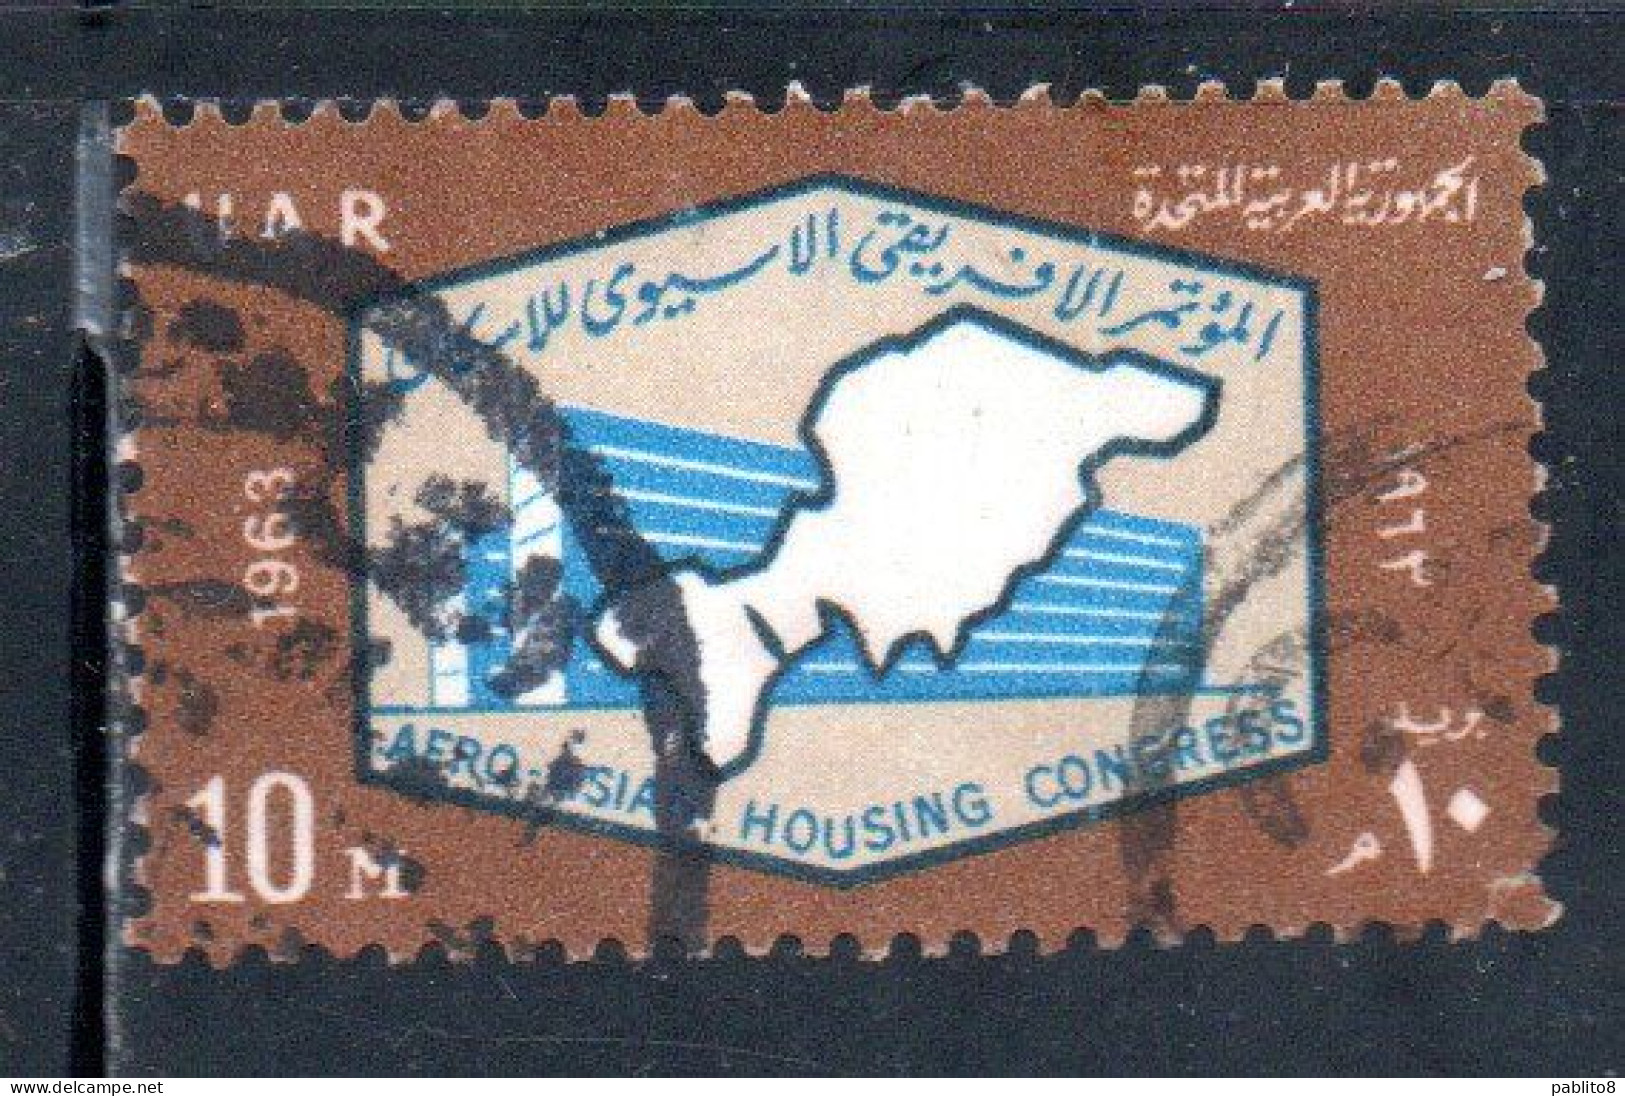 UAR EGYPT EGITTO 1963 AFRO-ASIAN HOUSING CONGRESS MODERN BUILDING AND MAP 10m  USED USATO OBLITERE' - Usati